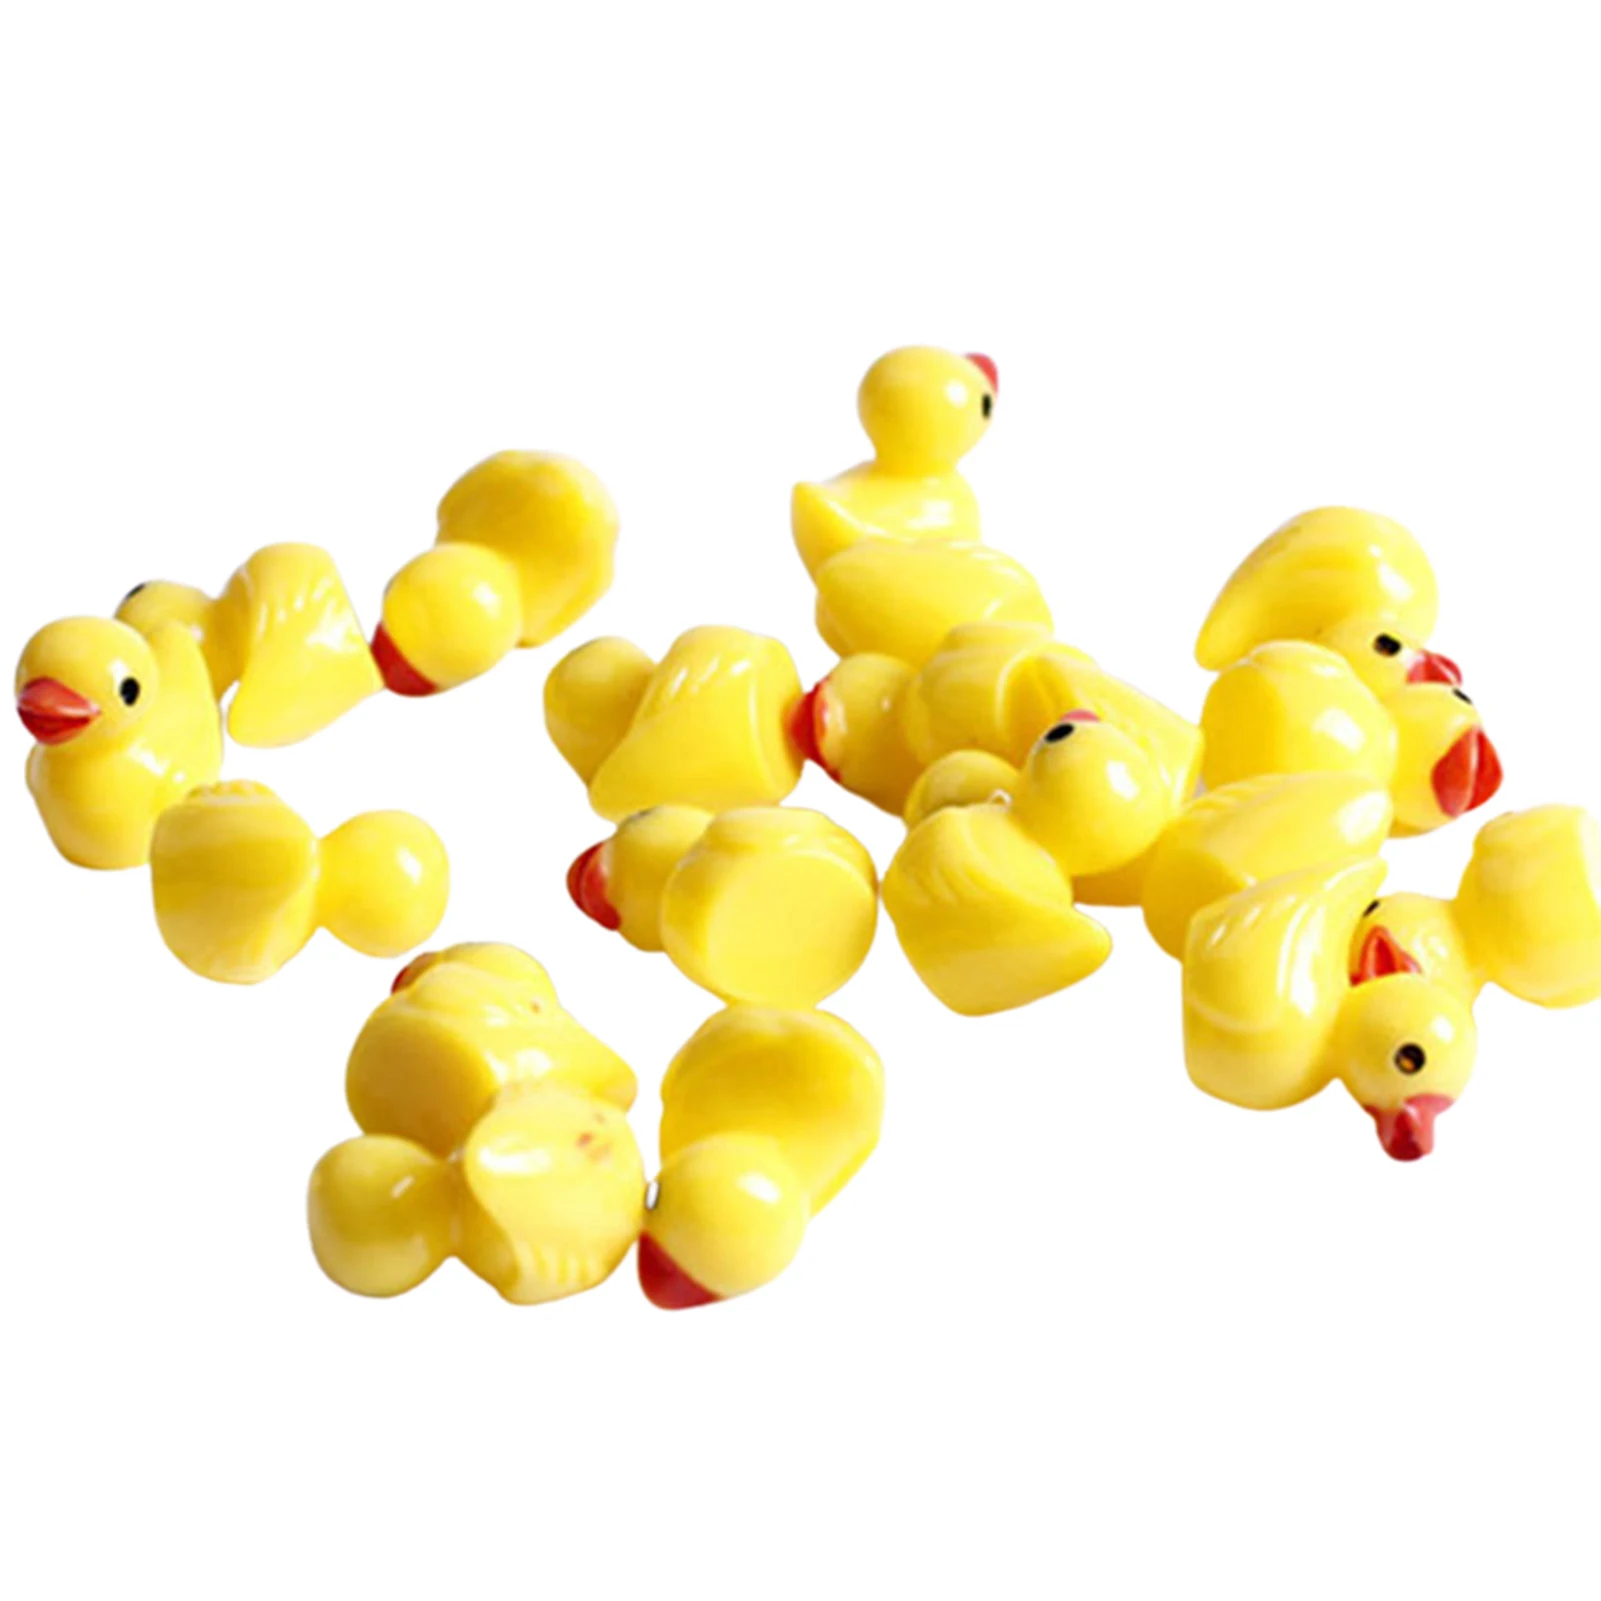 Mini Ducks 100 Pcs, Resin Duck